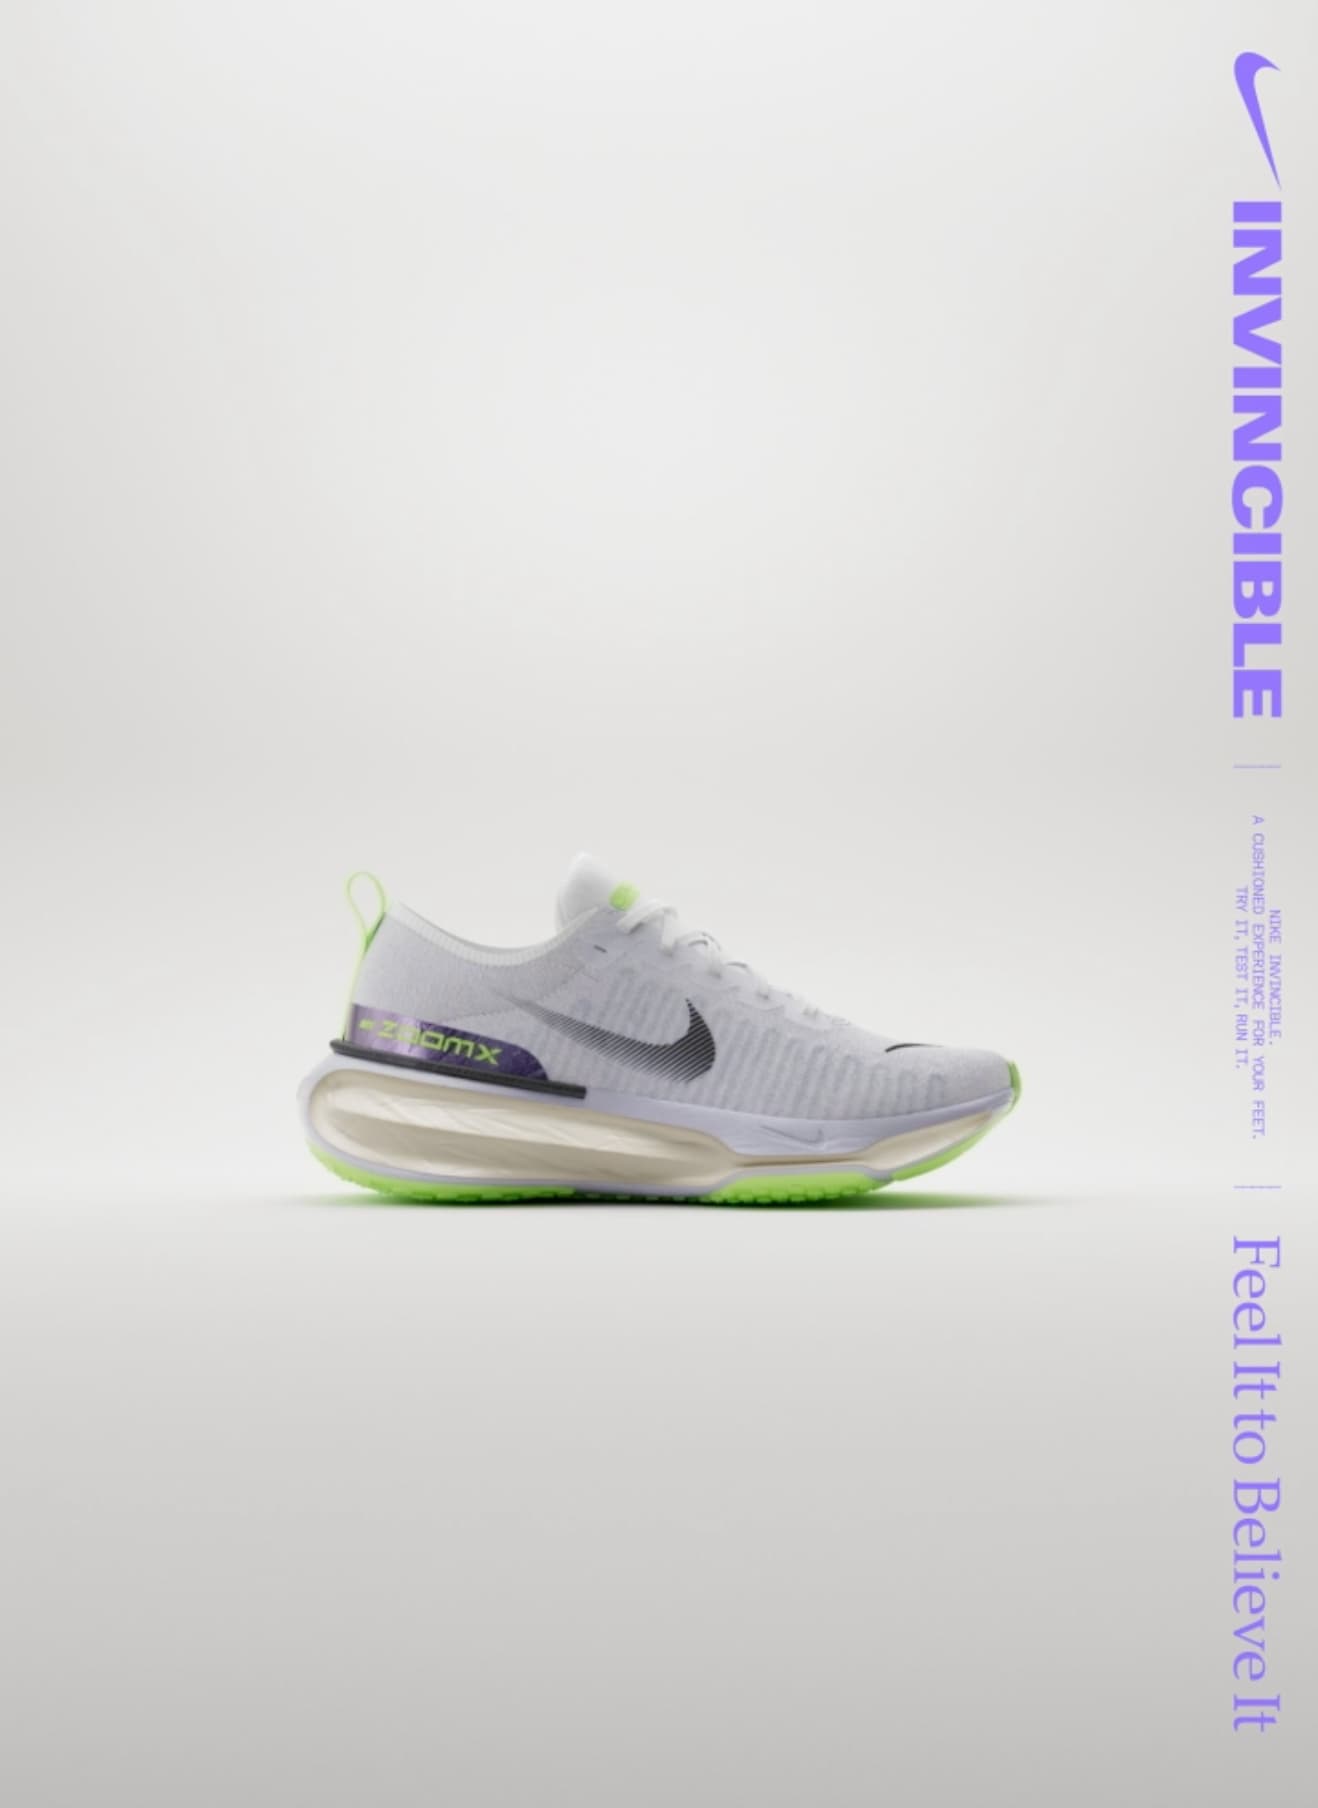 charla Integral Zapatos Site oficial de Nike. Nike ES